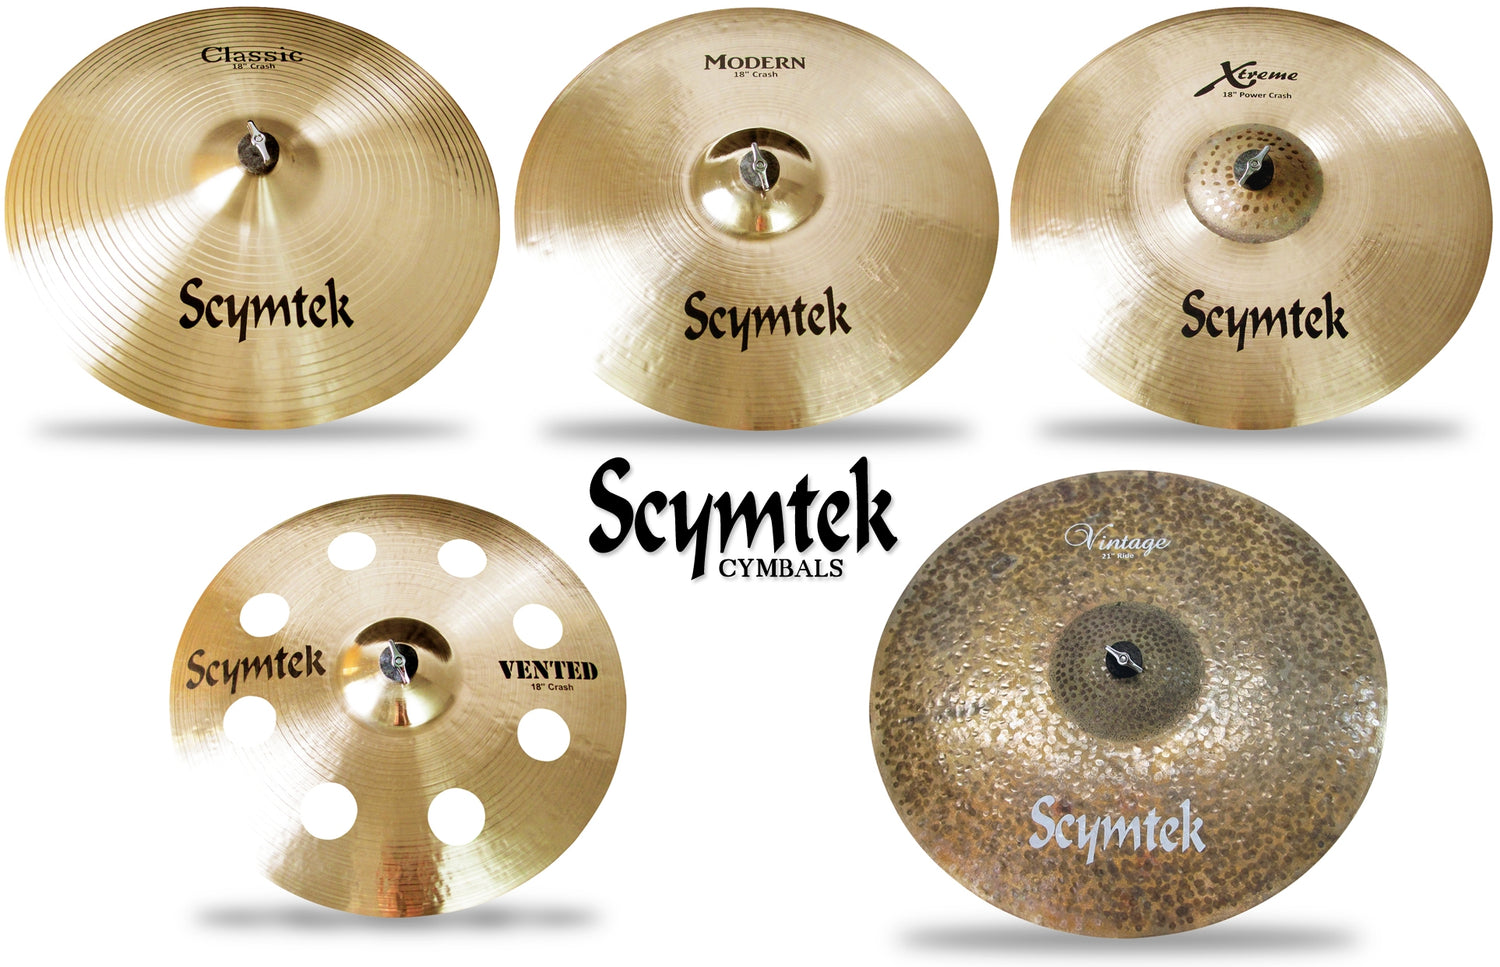 Scymtek Cymbals manufactured by Spaun Drums. Scymtek Cymbals are hand made, premium quality musical cymbals made in Turkey. Spaun Drums are professional quality musical drum kits and snare drums.